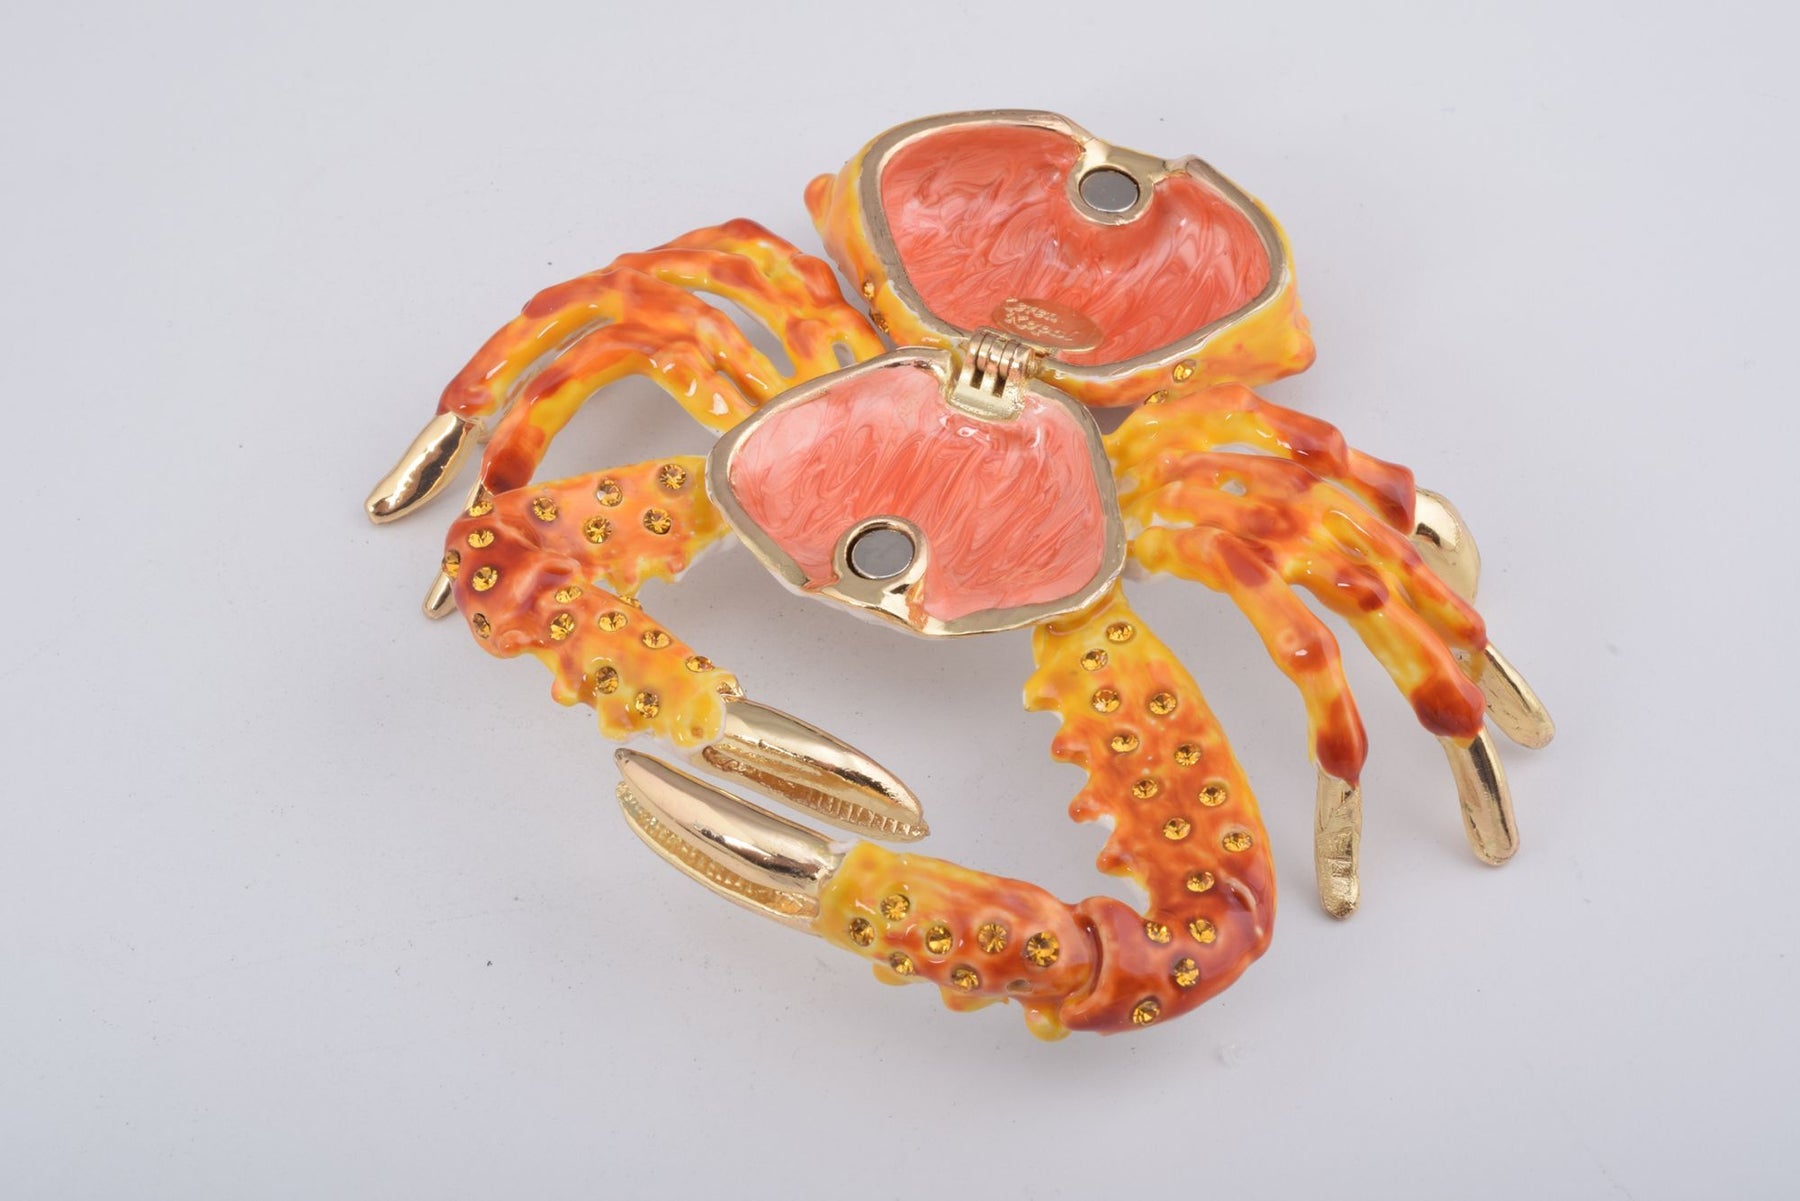 Keren Kopal Orange Crab  70.50